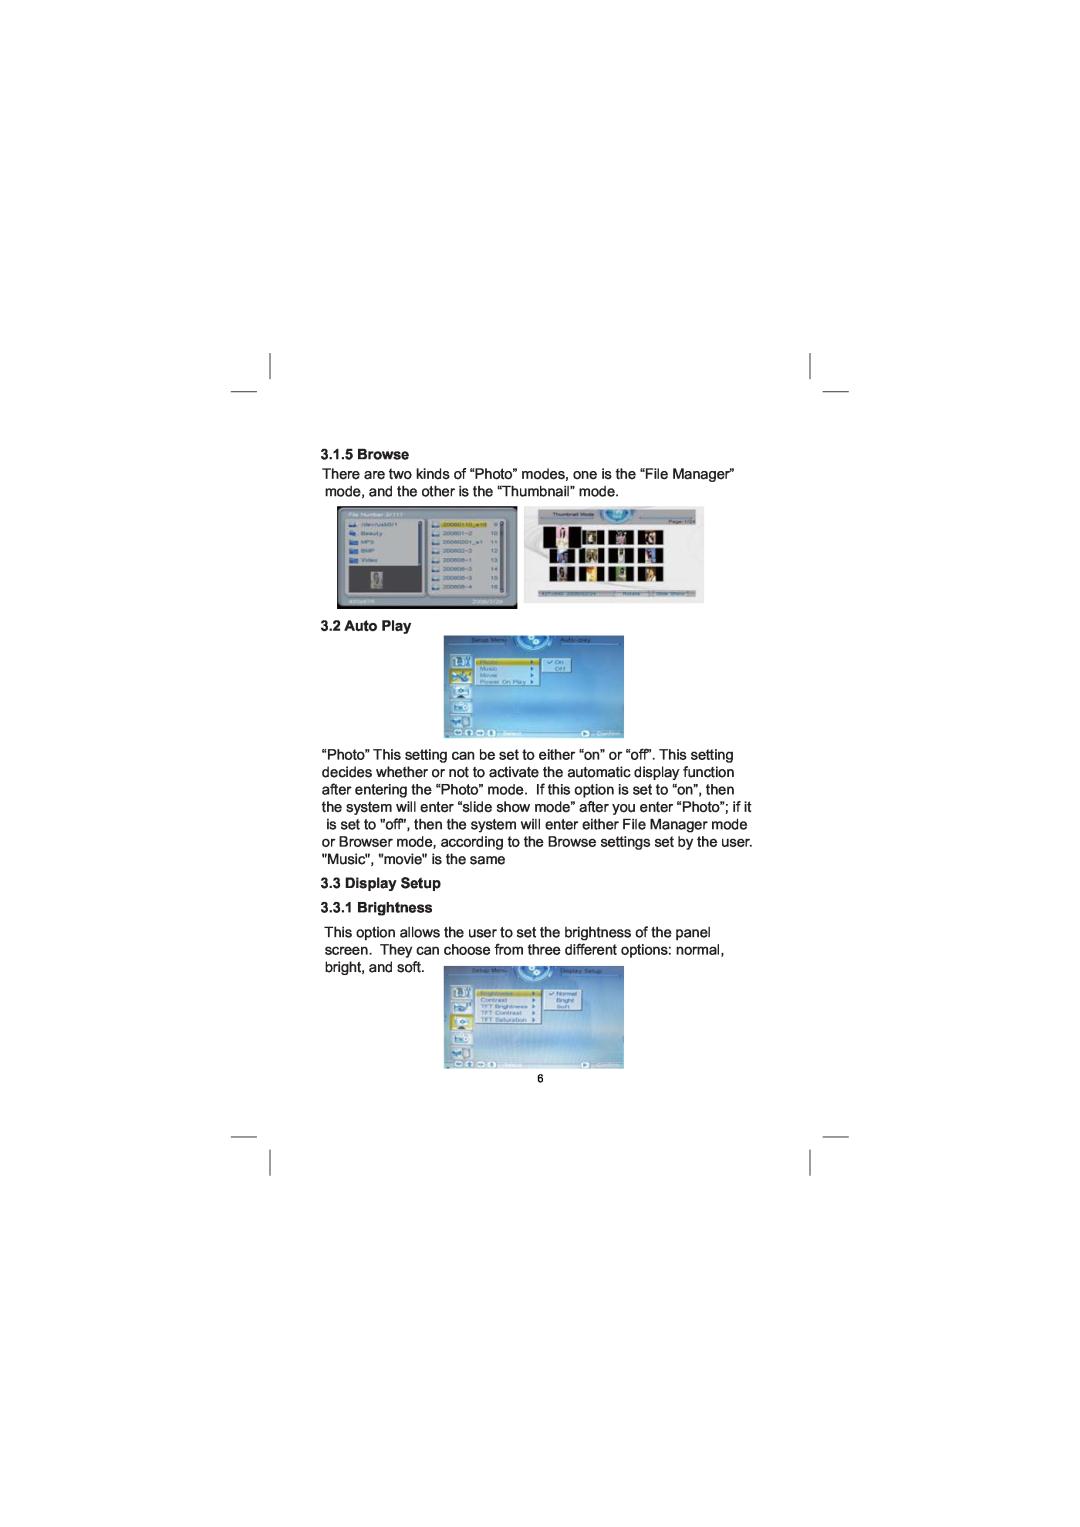 Sylvania SDPF1033 user manual Browse, Auto Play, Display Setup 3.3.1 Brightness 